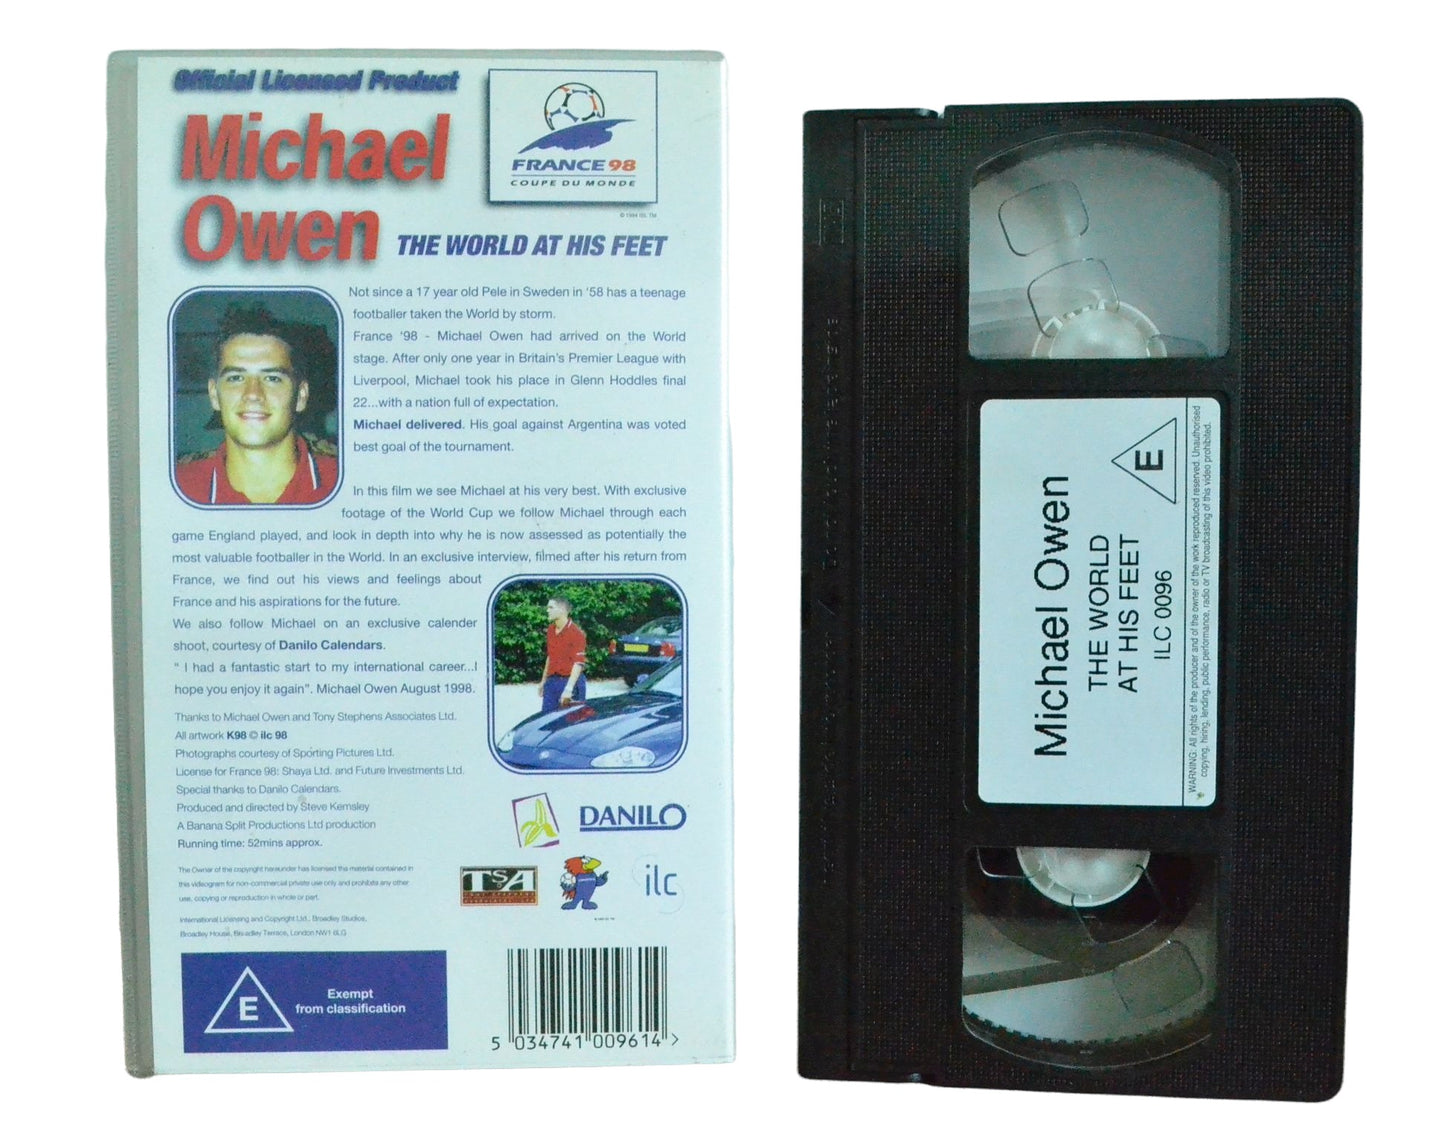 Michael Owen - The World At His Feet - Michael Owen - France 98 Coupe Du Monde - Football - Pal VHS-